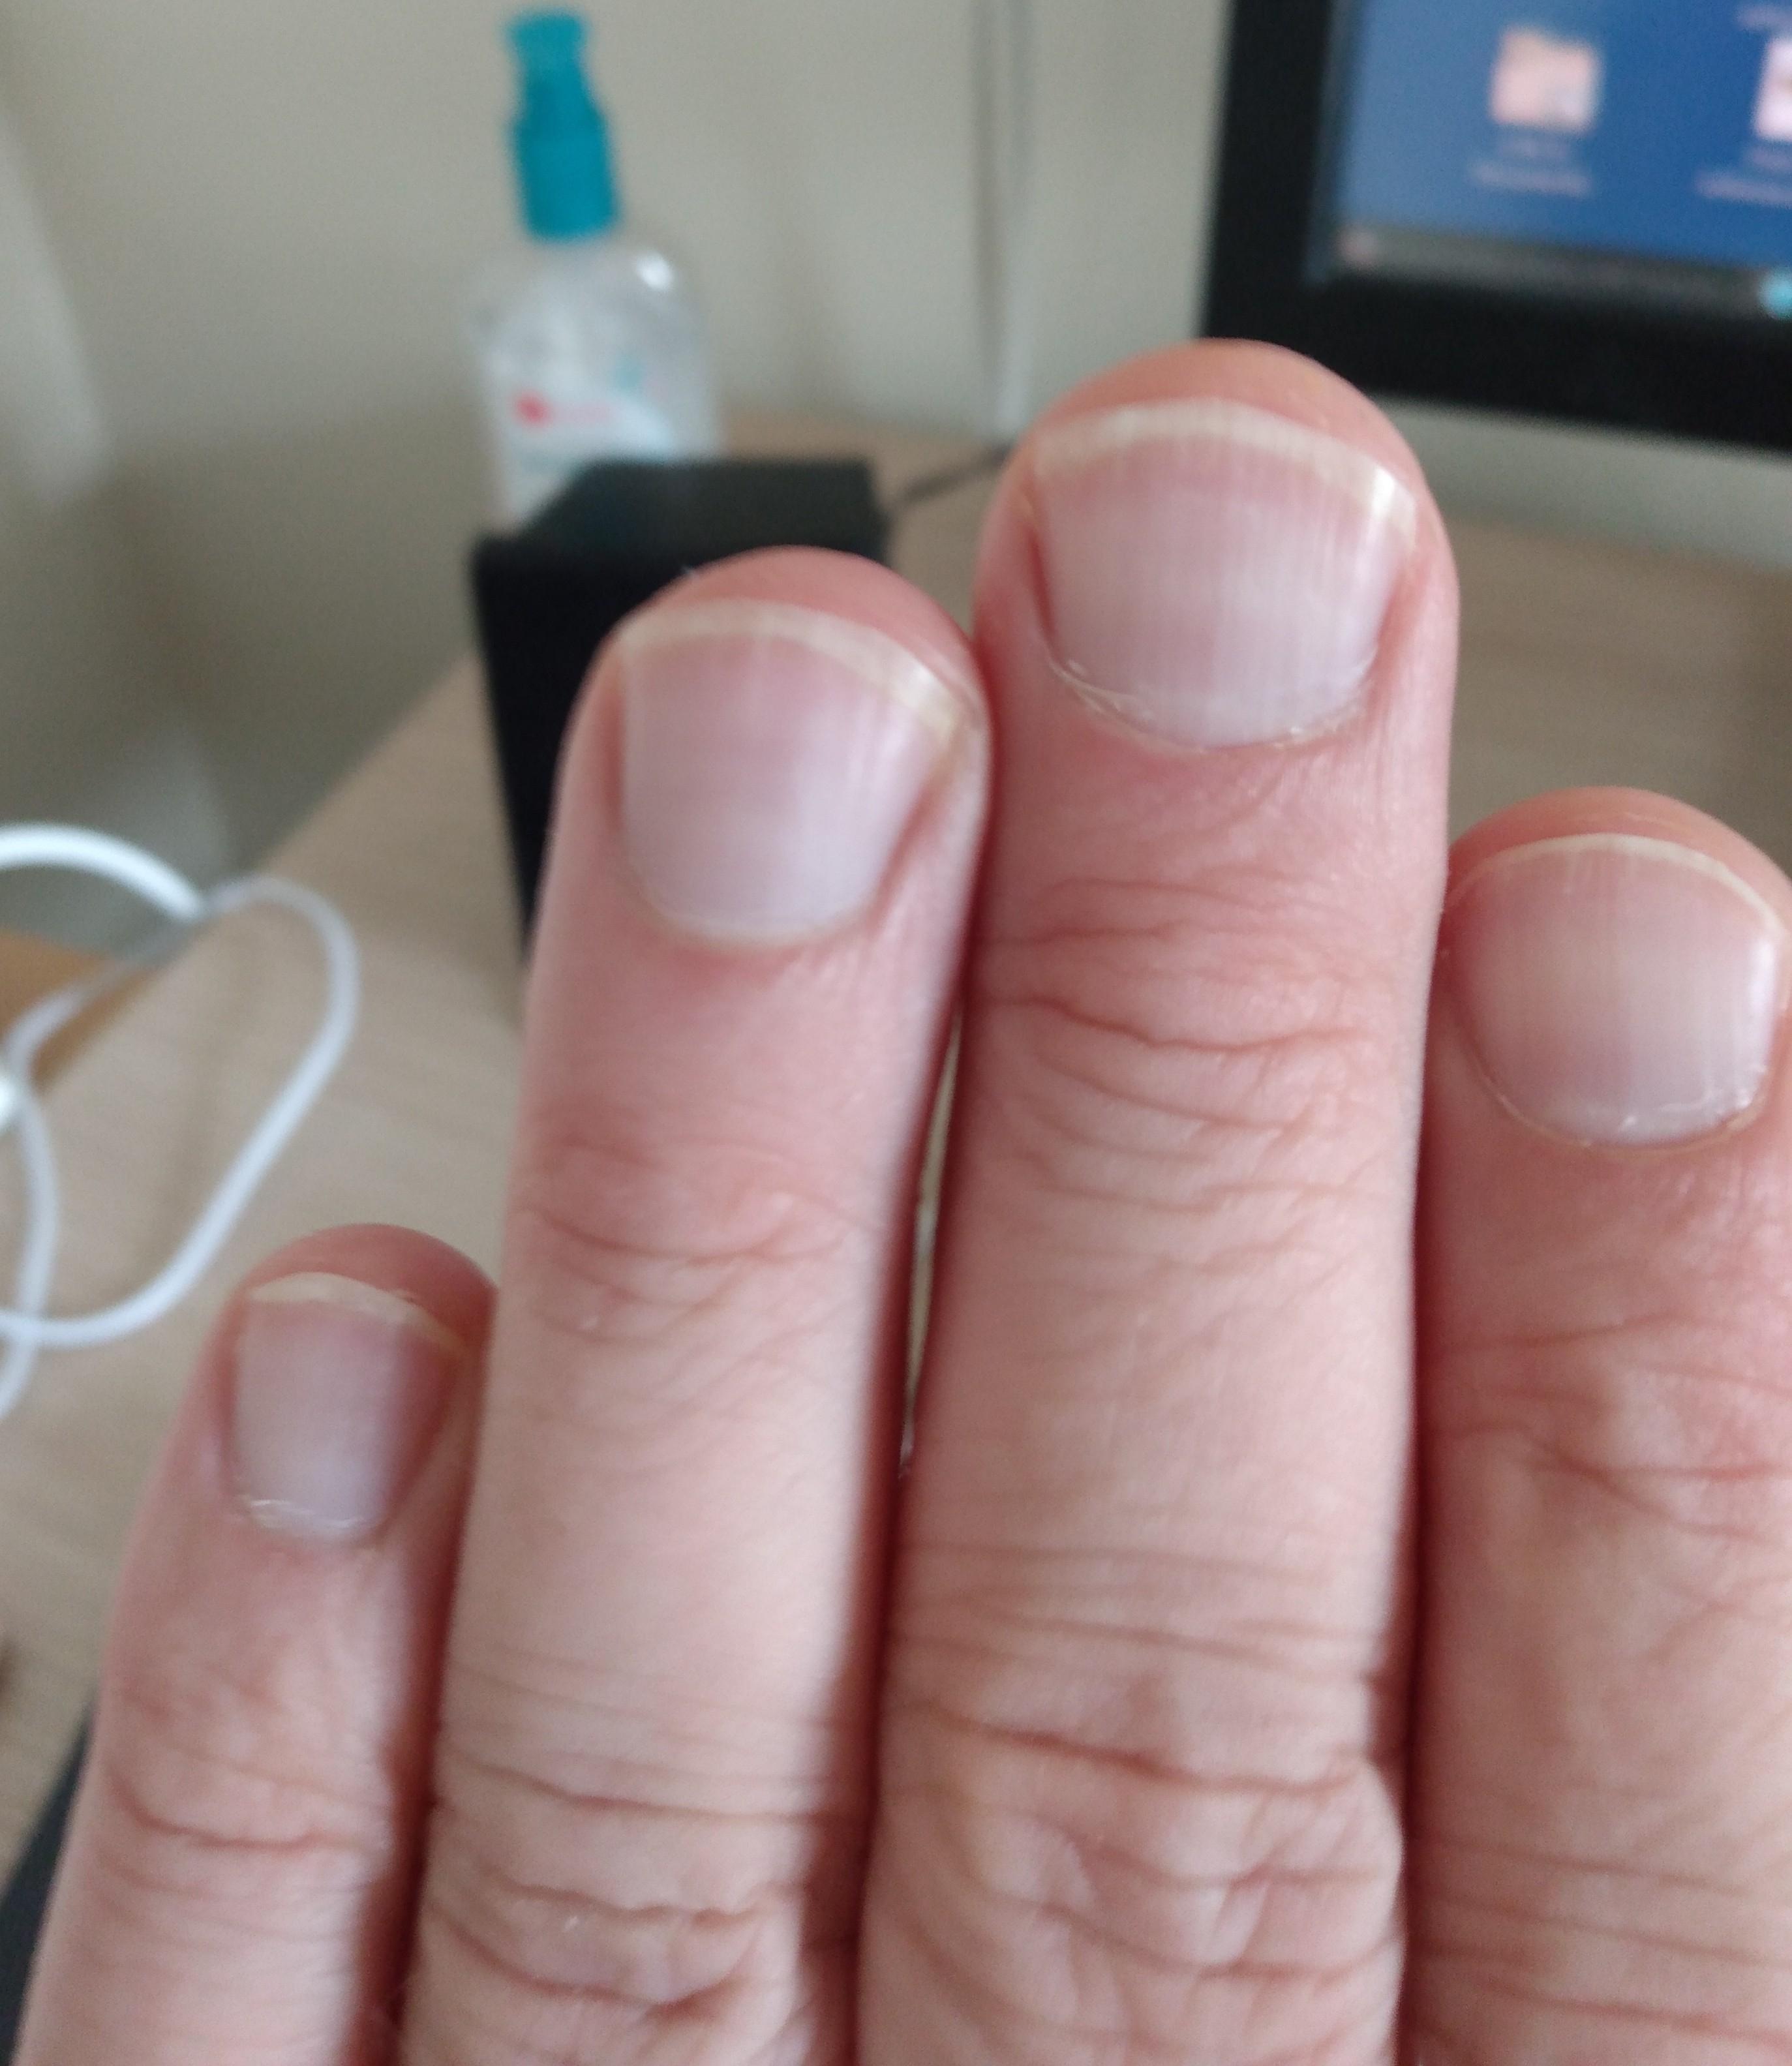 Fingernail and Toenail Injury - Skin Disorders - MSD Manual Consumer Version